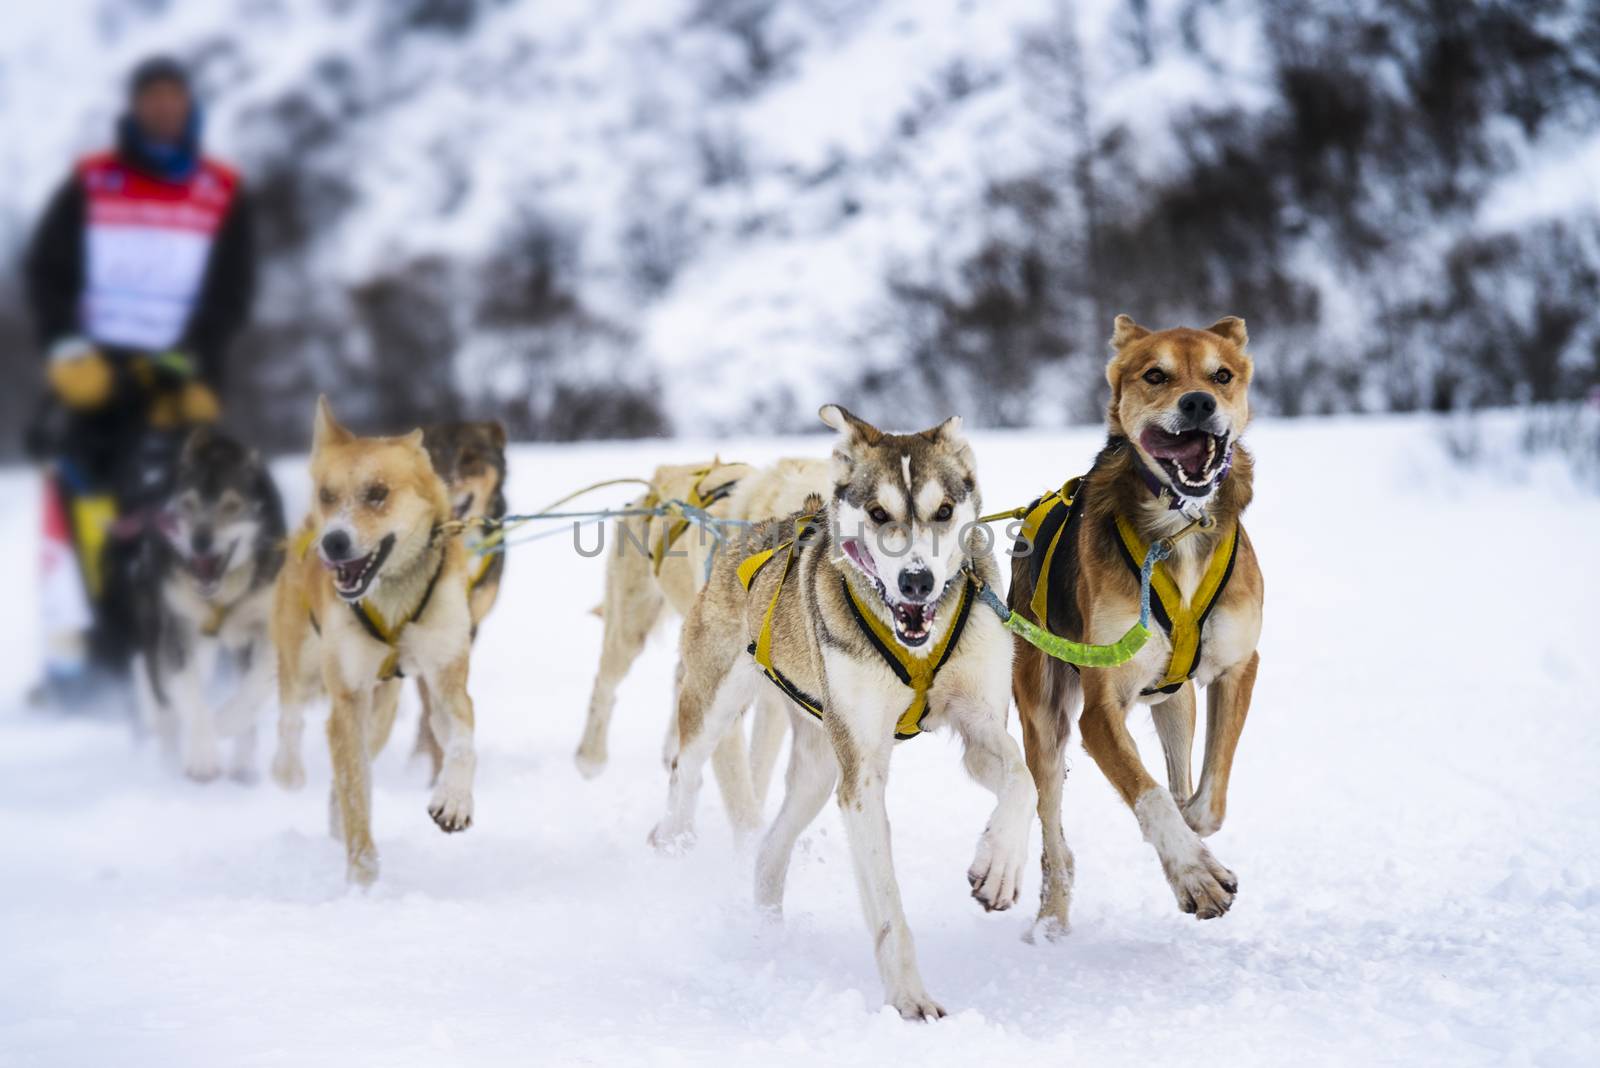 Sledge dogs in speed racing by ventdusud